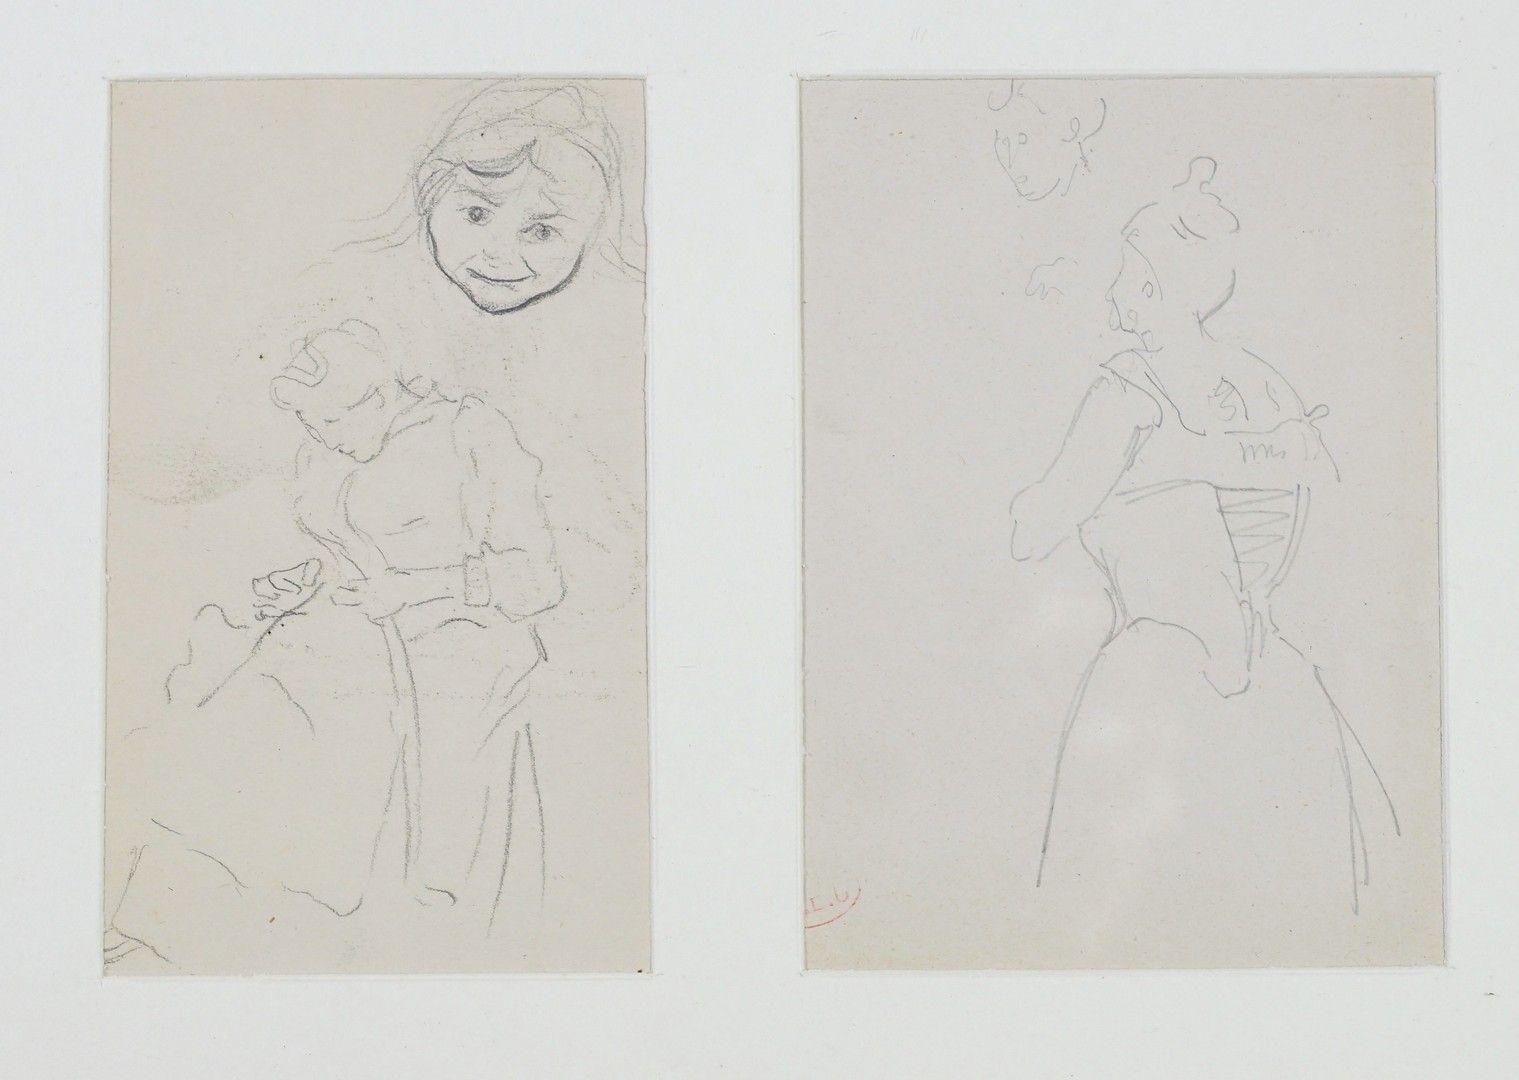 Henri Edmond CROSS (1856-1910) 三个框架中的六个人物研究
轮廓型铅笔。有四个签名的邮票
中等尺寸，10 x 10厘米